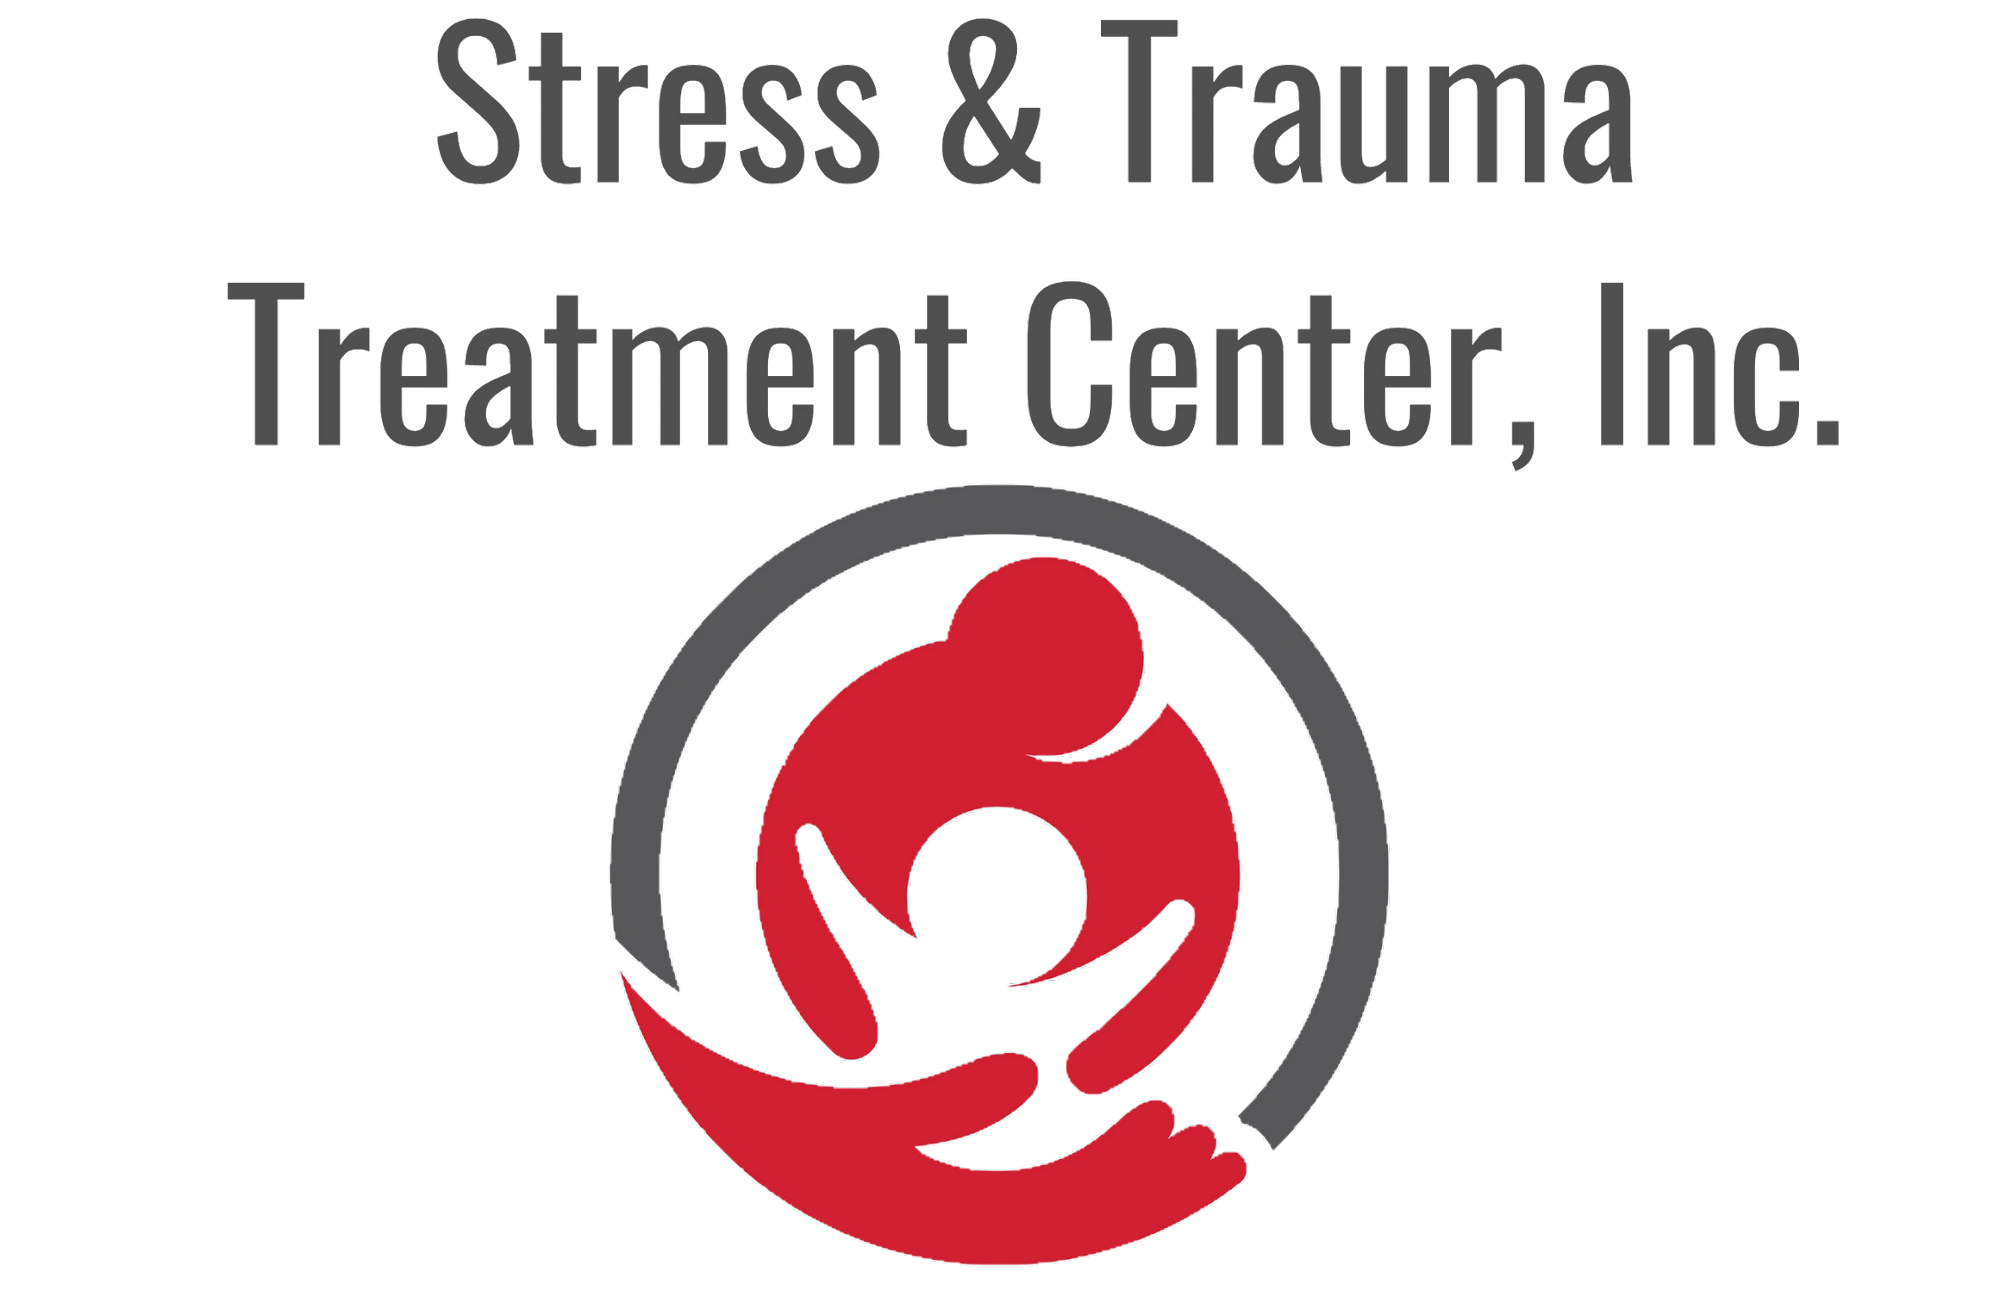 The Stress & Trauma Treatment Center 1200 Locust St, Eldorado Illinois 62930